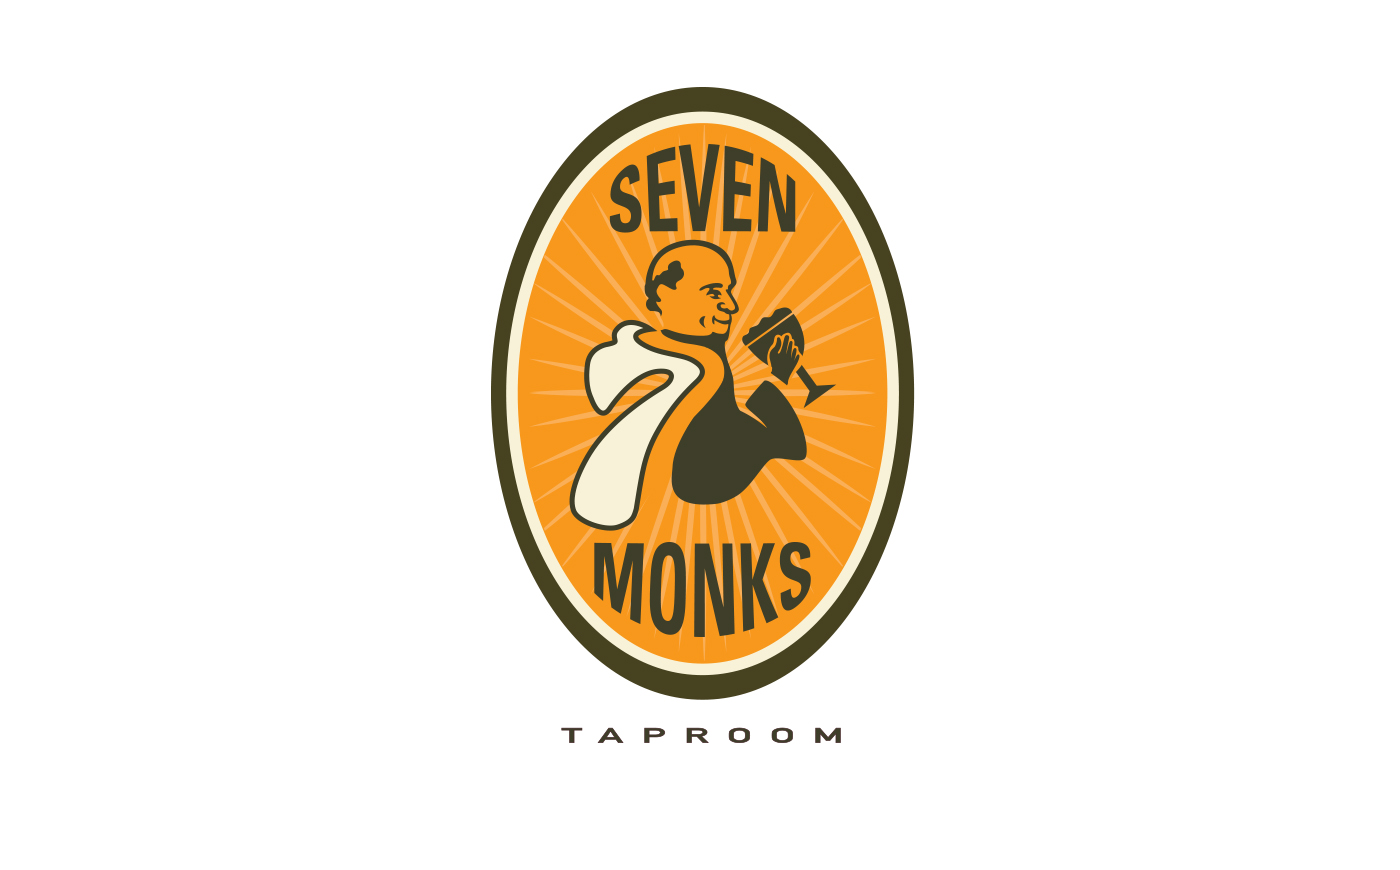 7 Monks Taproom